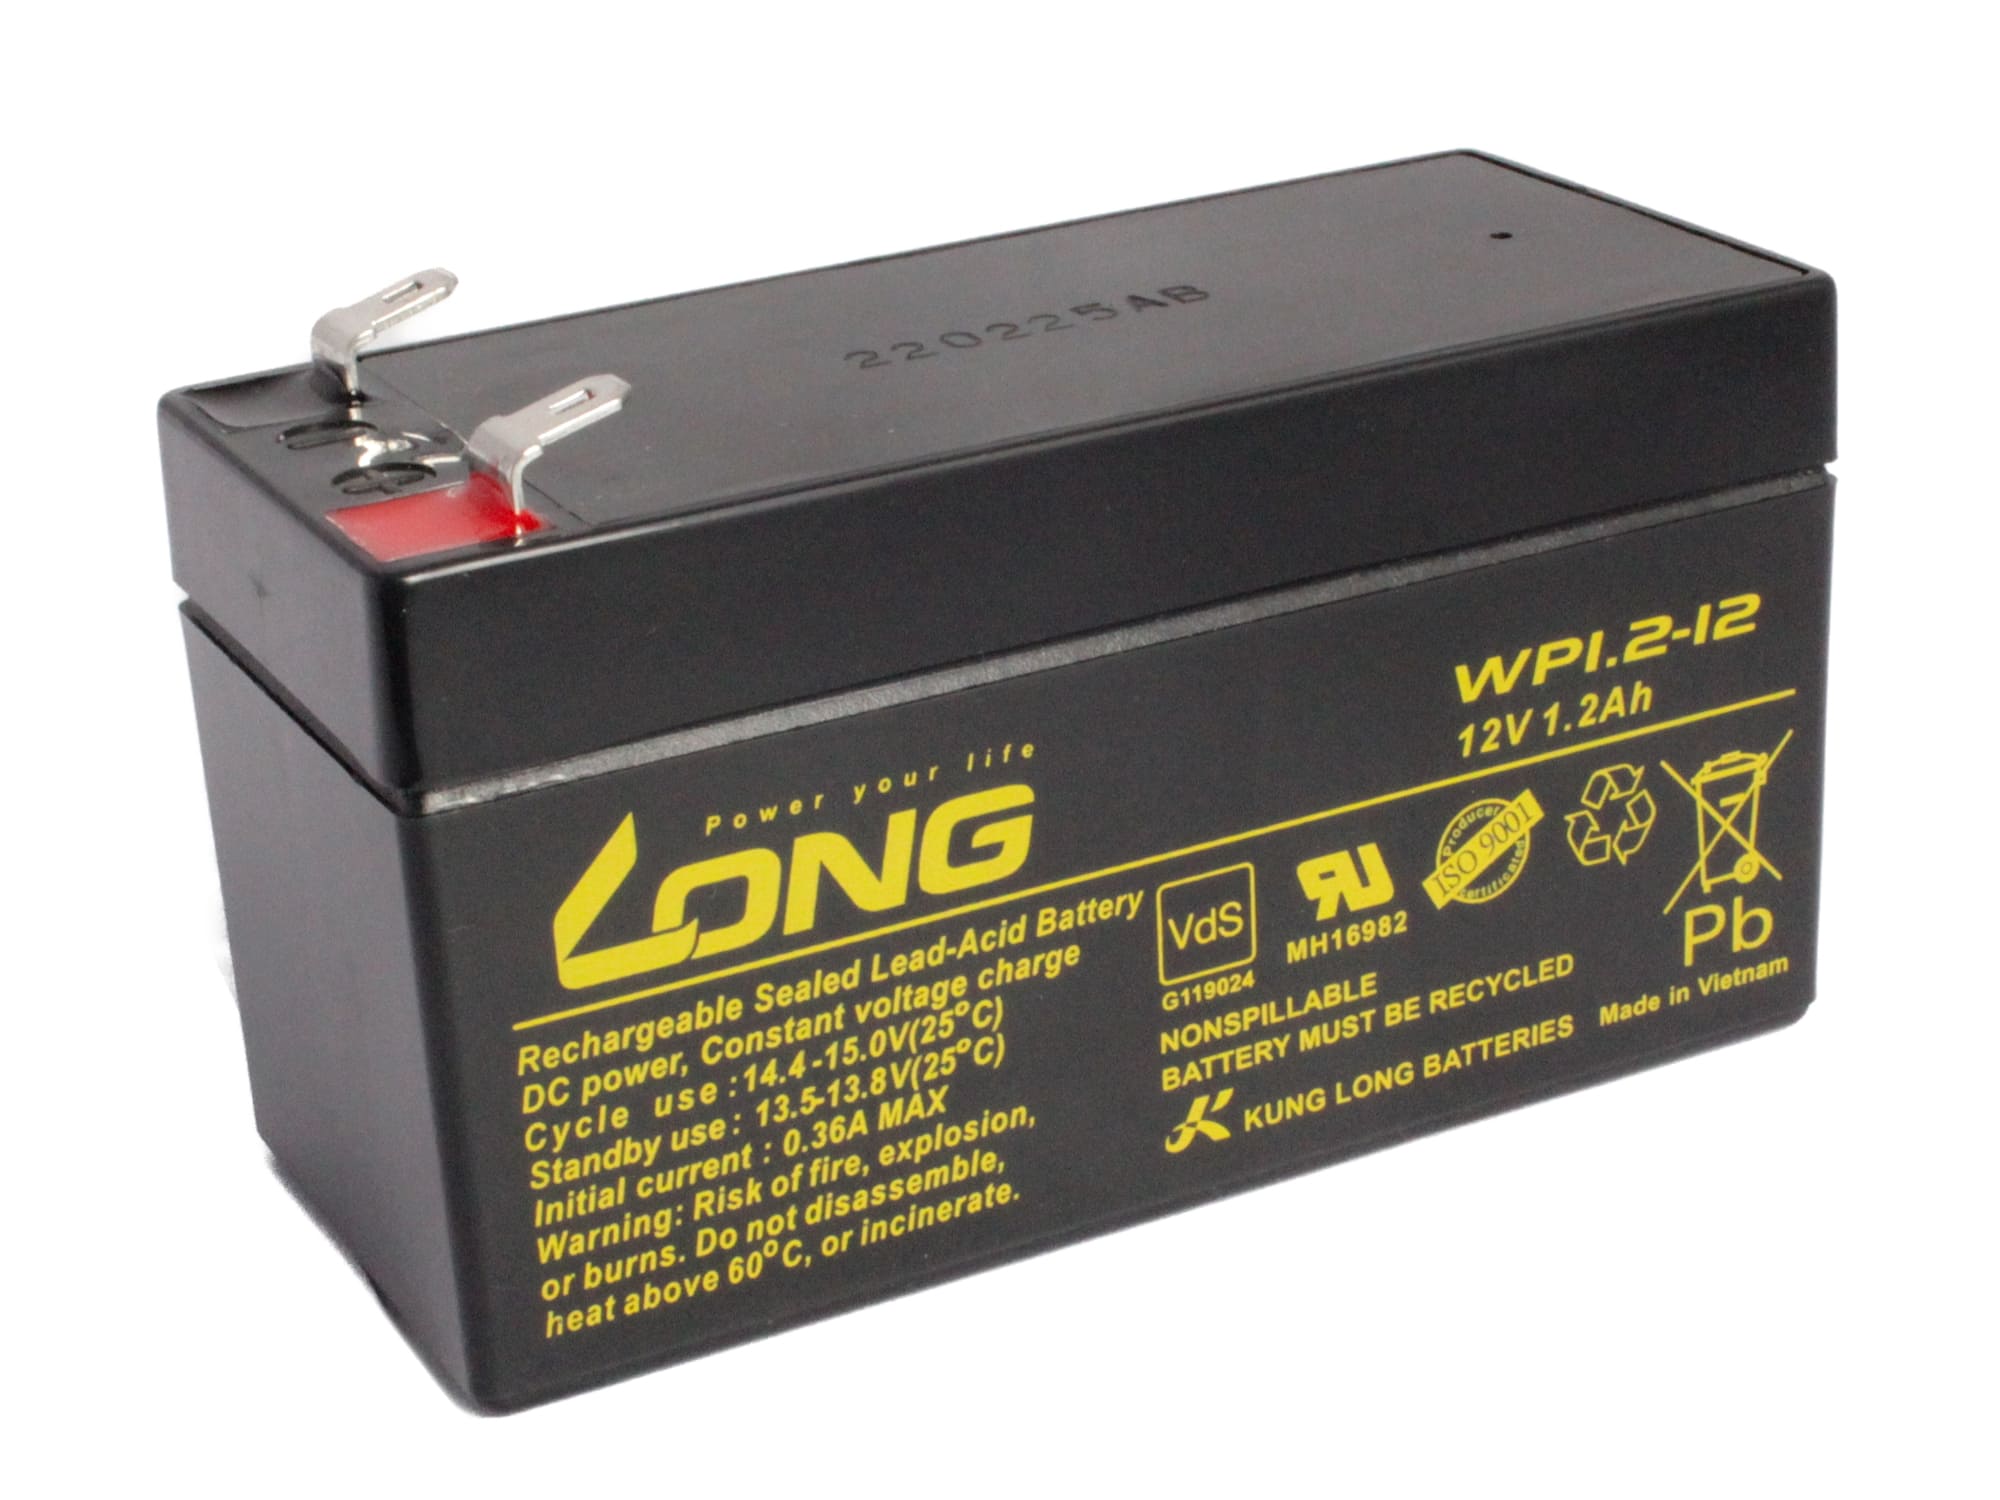 Akku kompatibel EP1,2-12 12V 1,2Ah Blei Batterie wiederaufladbar auslaufsicher 